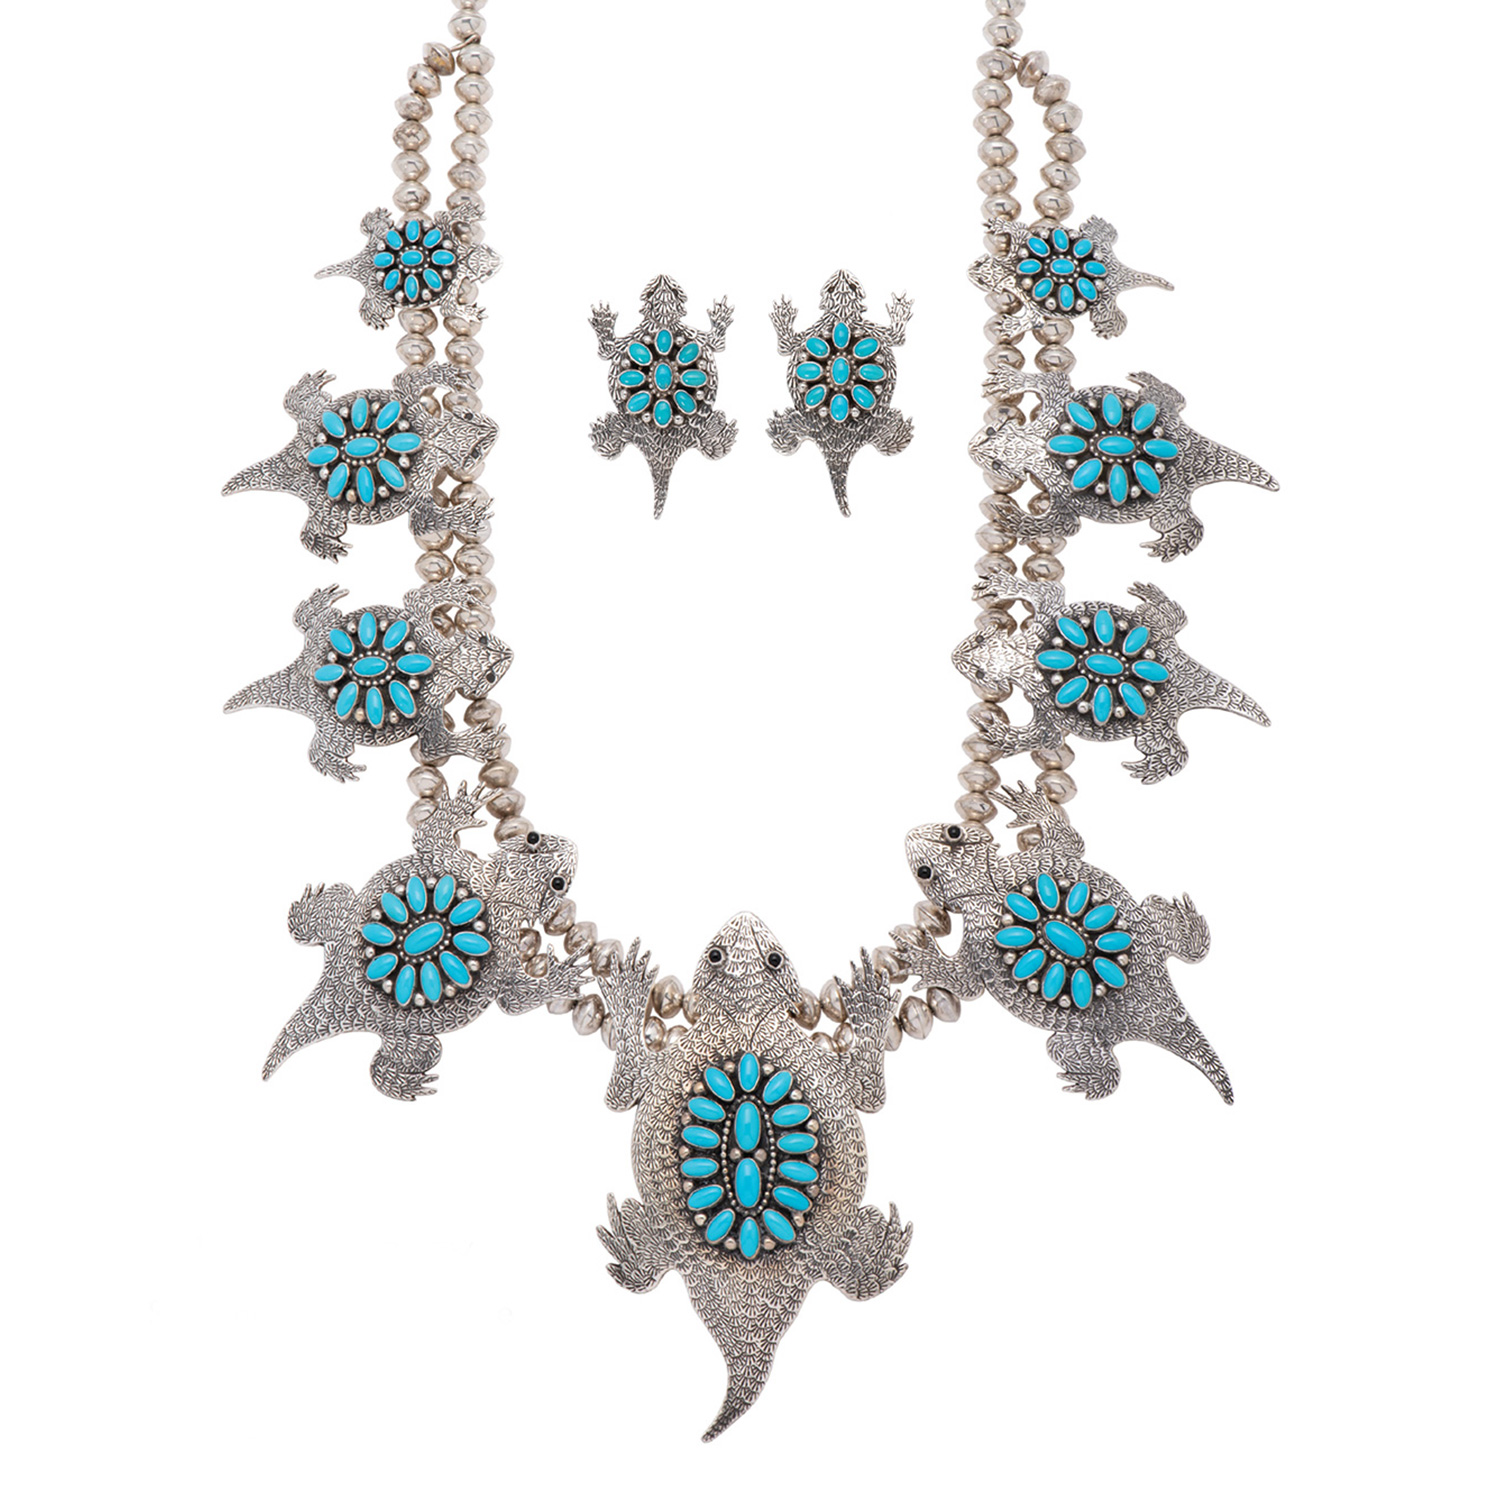 Horned Lizard Glass Necklace